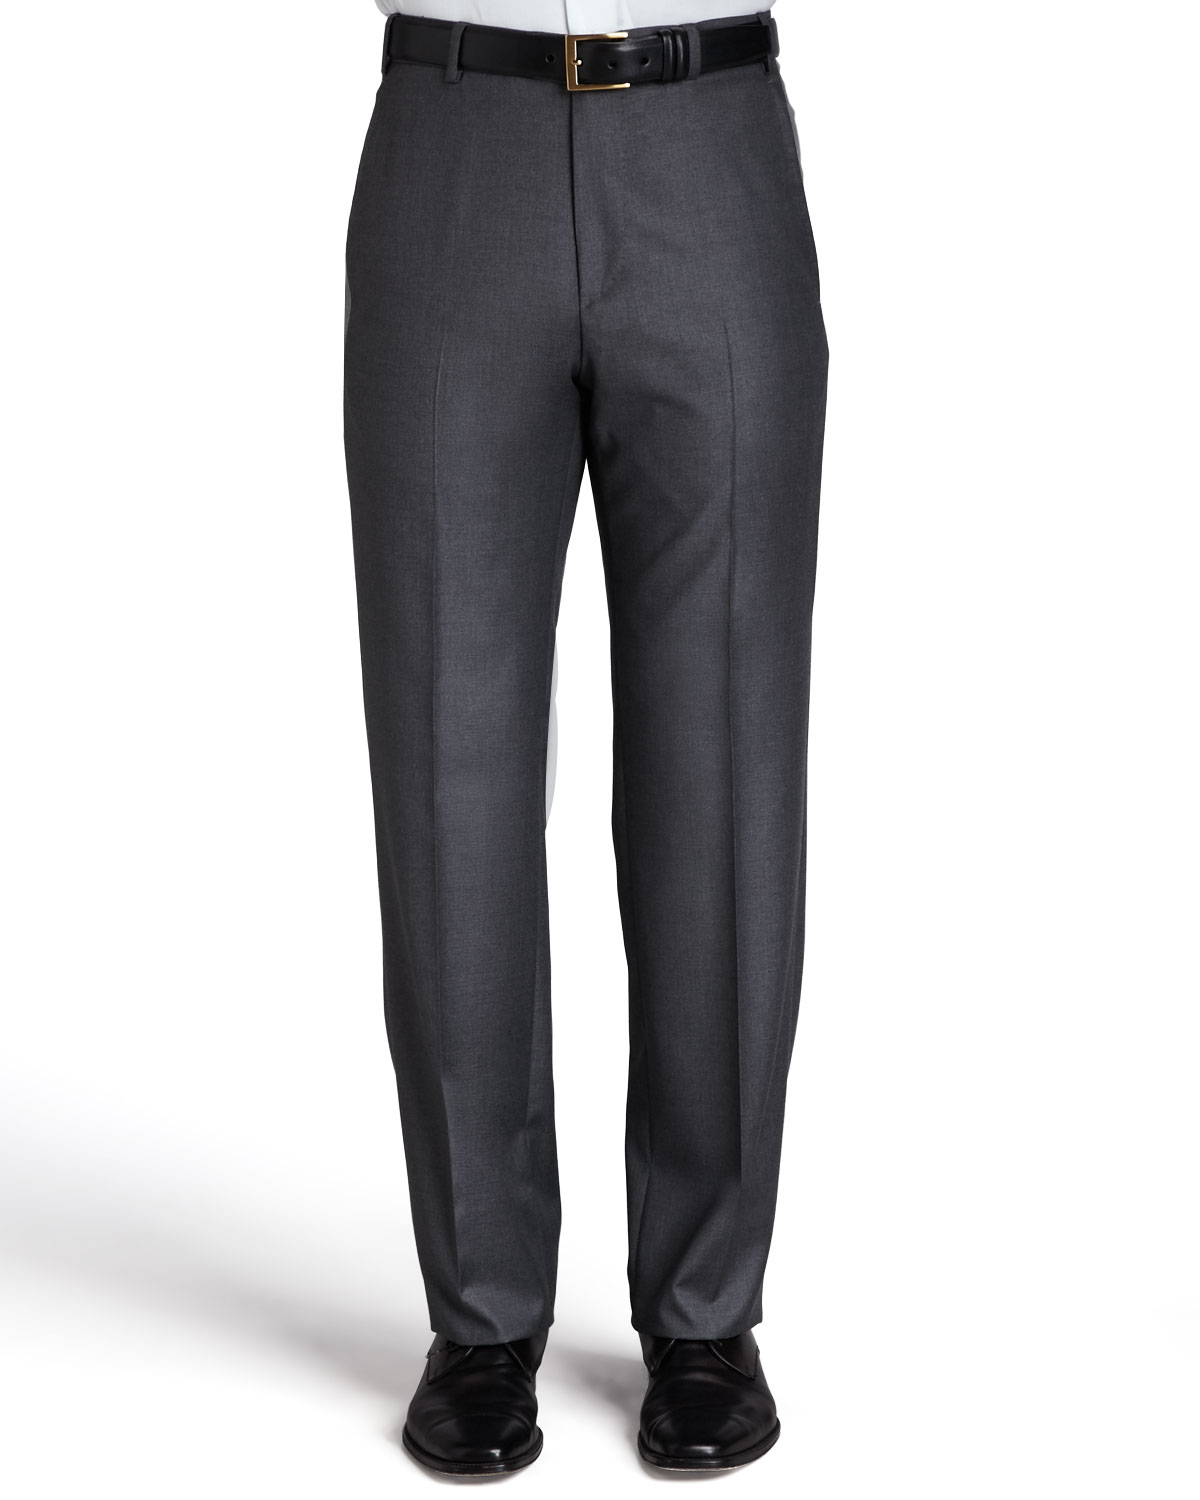 Lyst - Zanella Platinum Dress Pants in Gray for Men